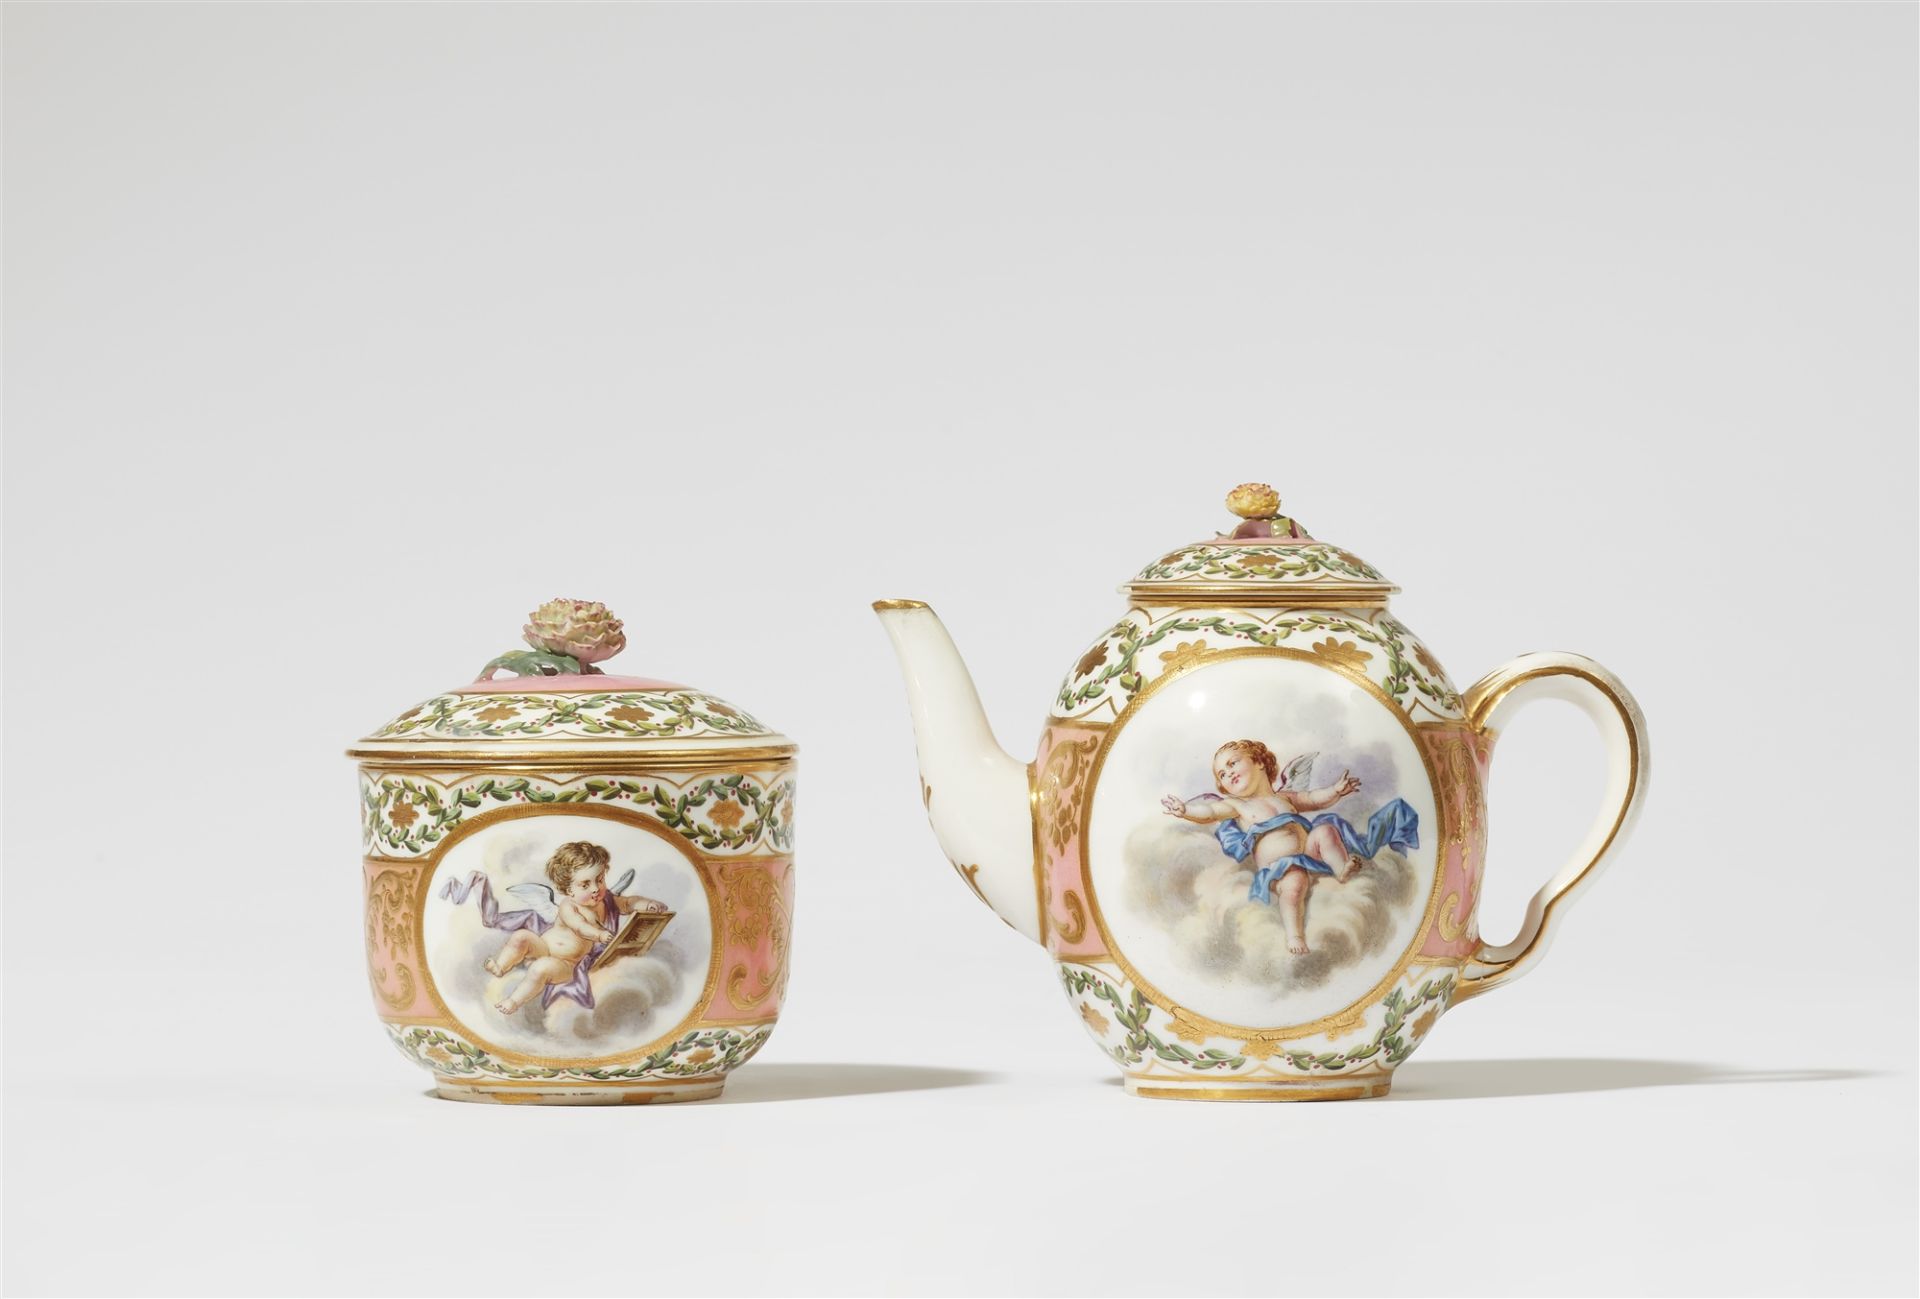 A Sèvres soft porcelain teapot and sugar box with putti